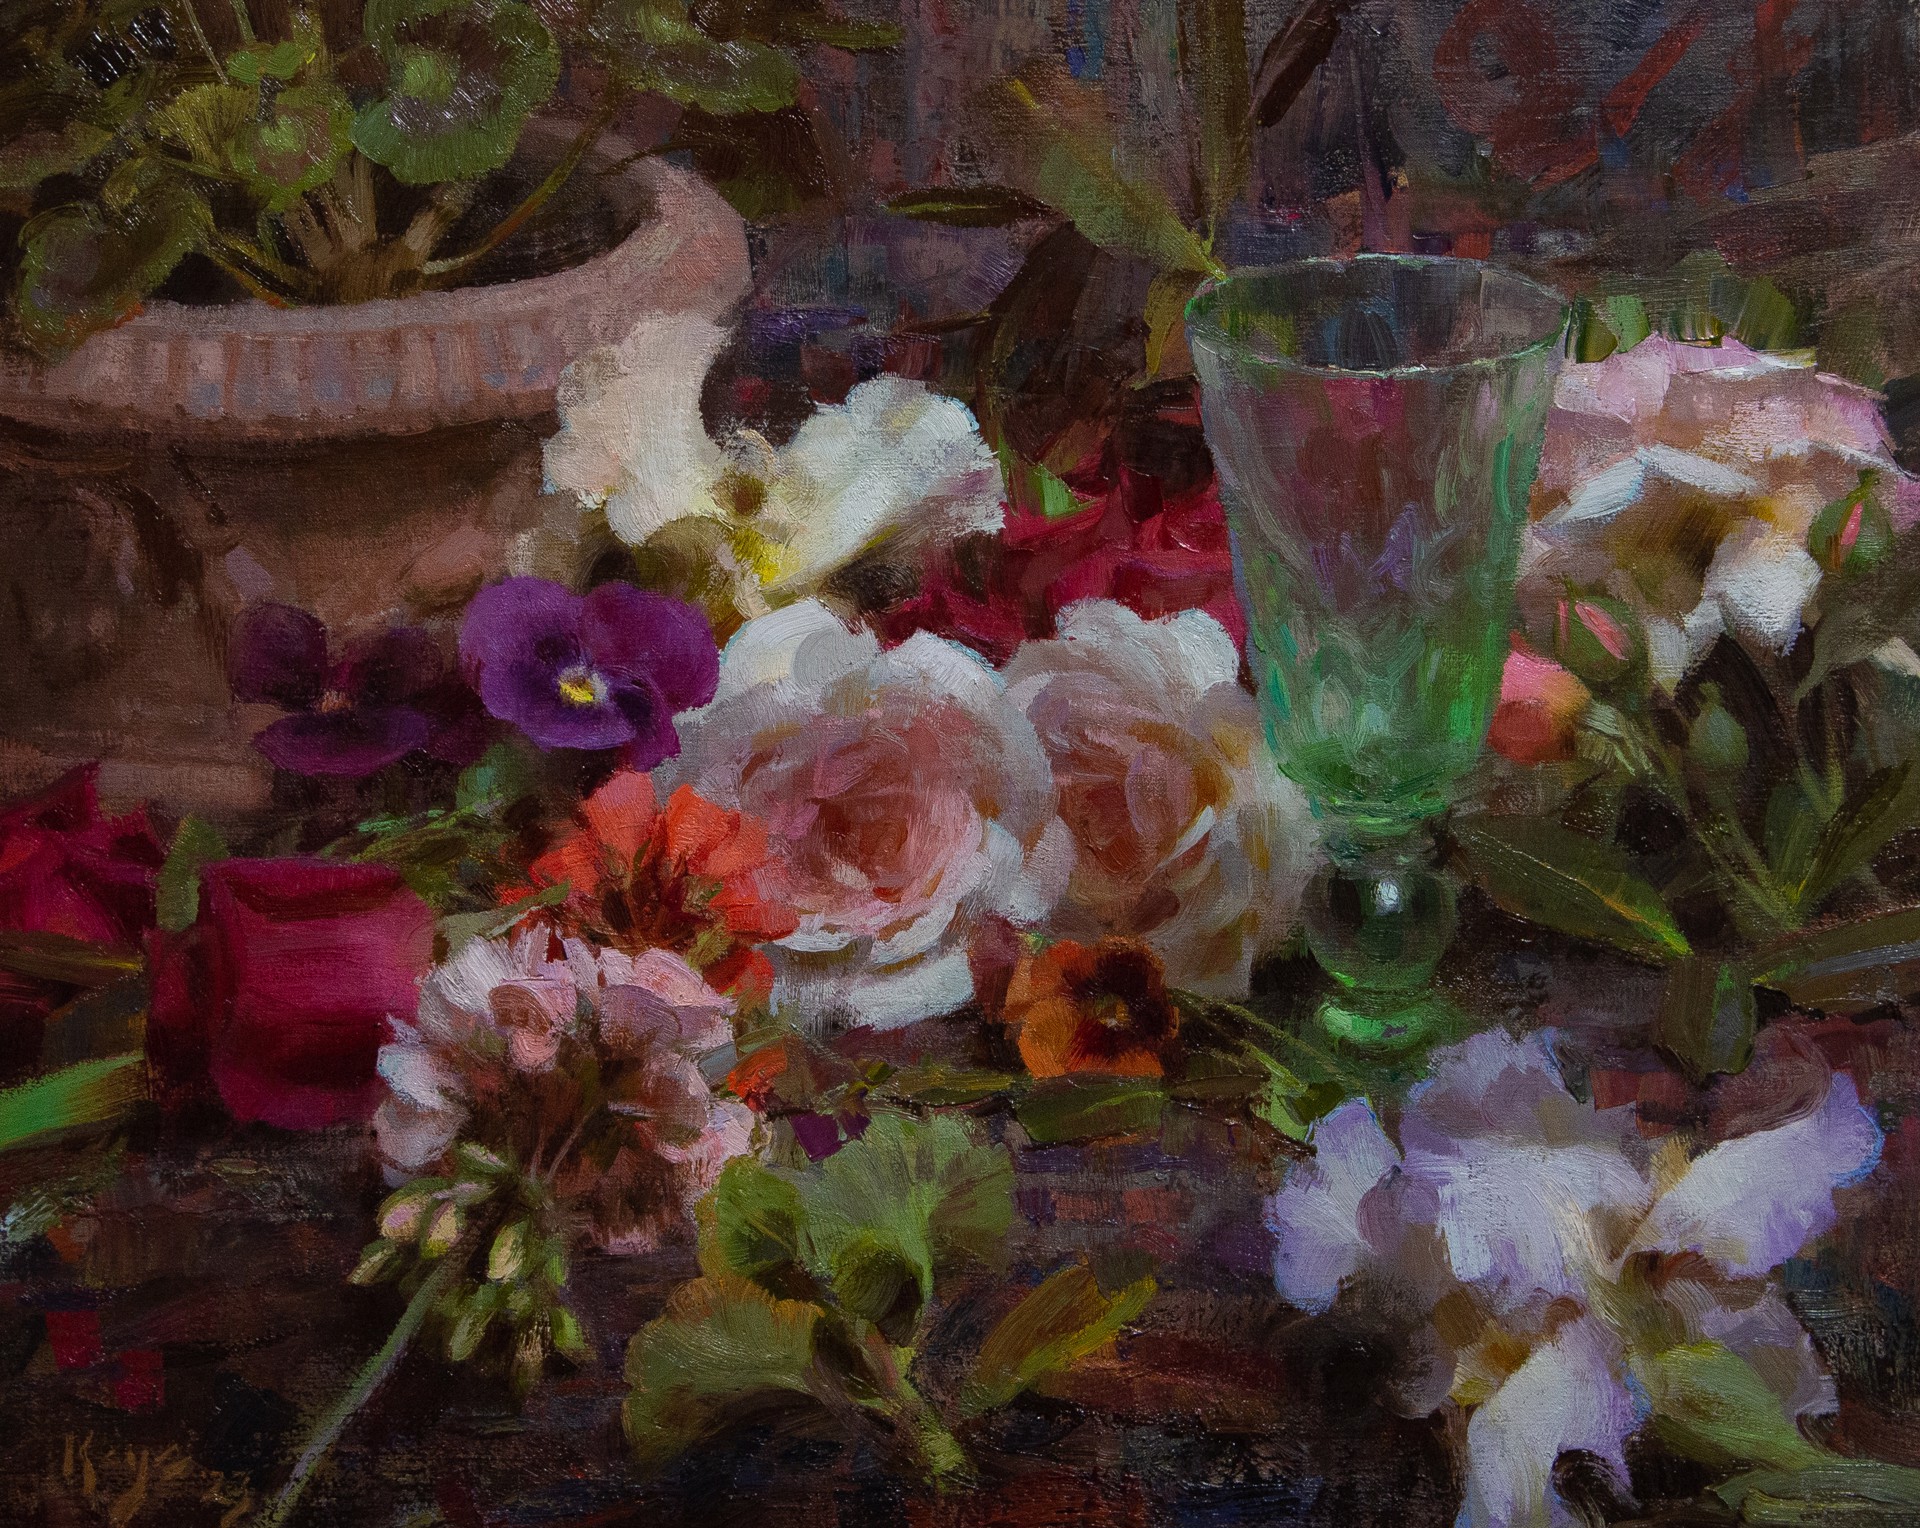 Green Glass with Summer Flowers by Daniel Keys